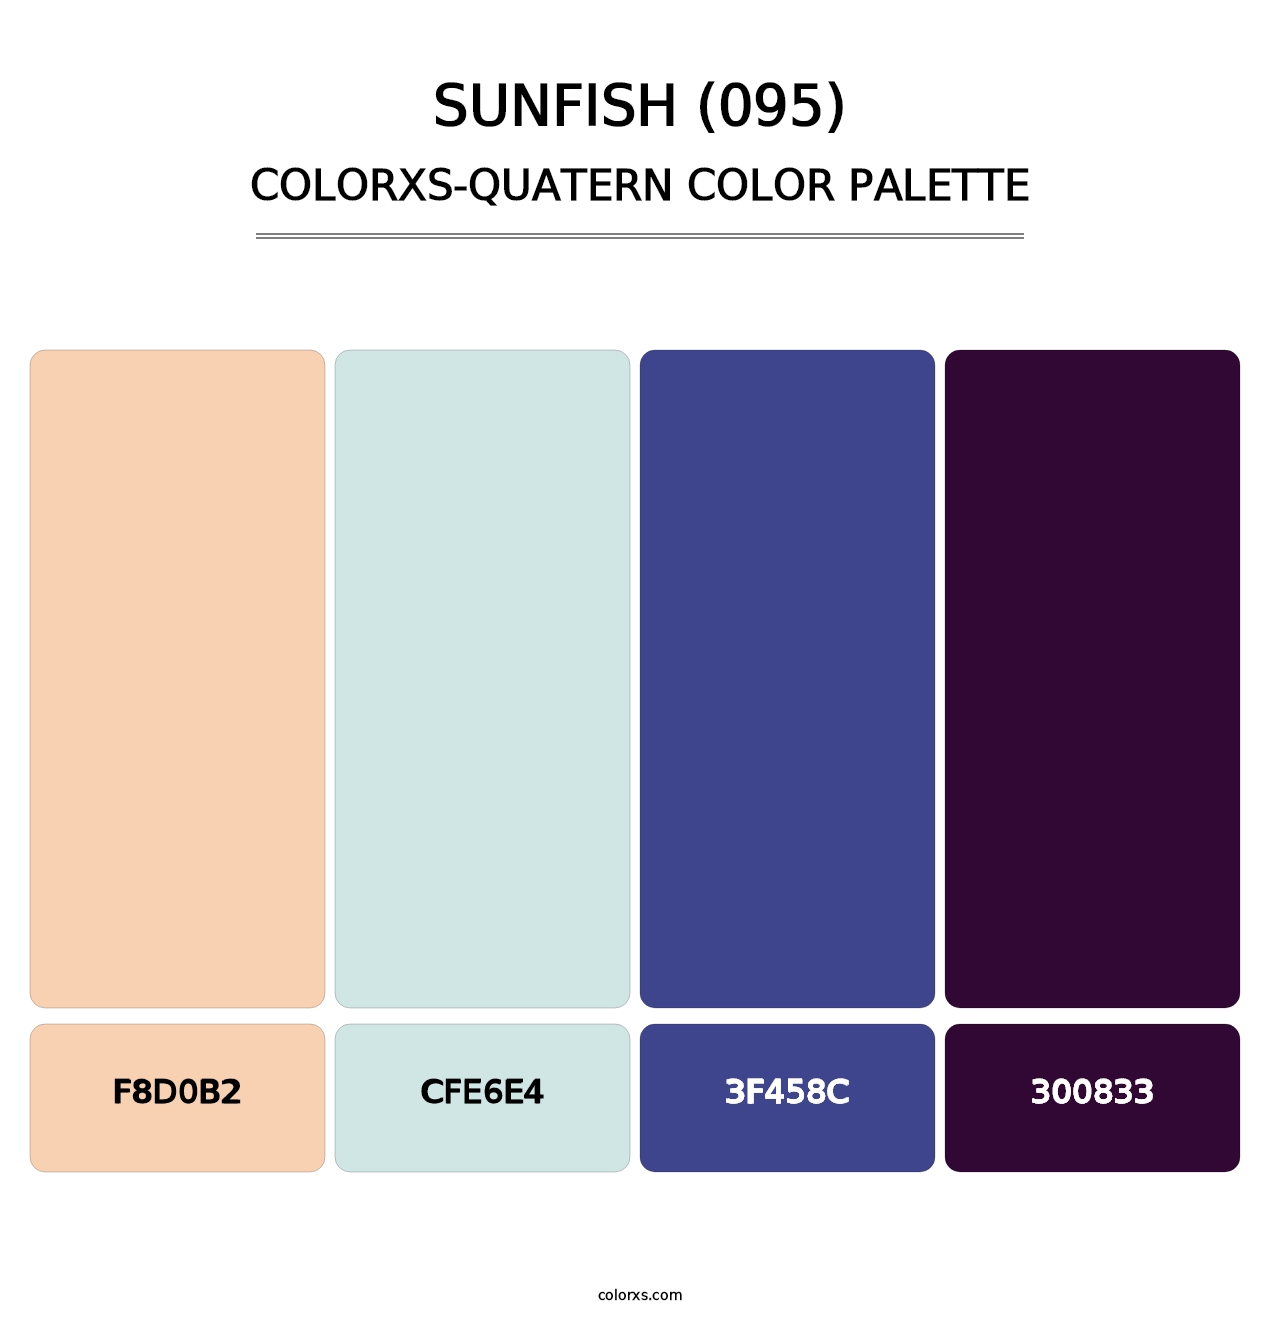 Sunfish (095) - Colorxs Quatern Palette